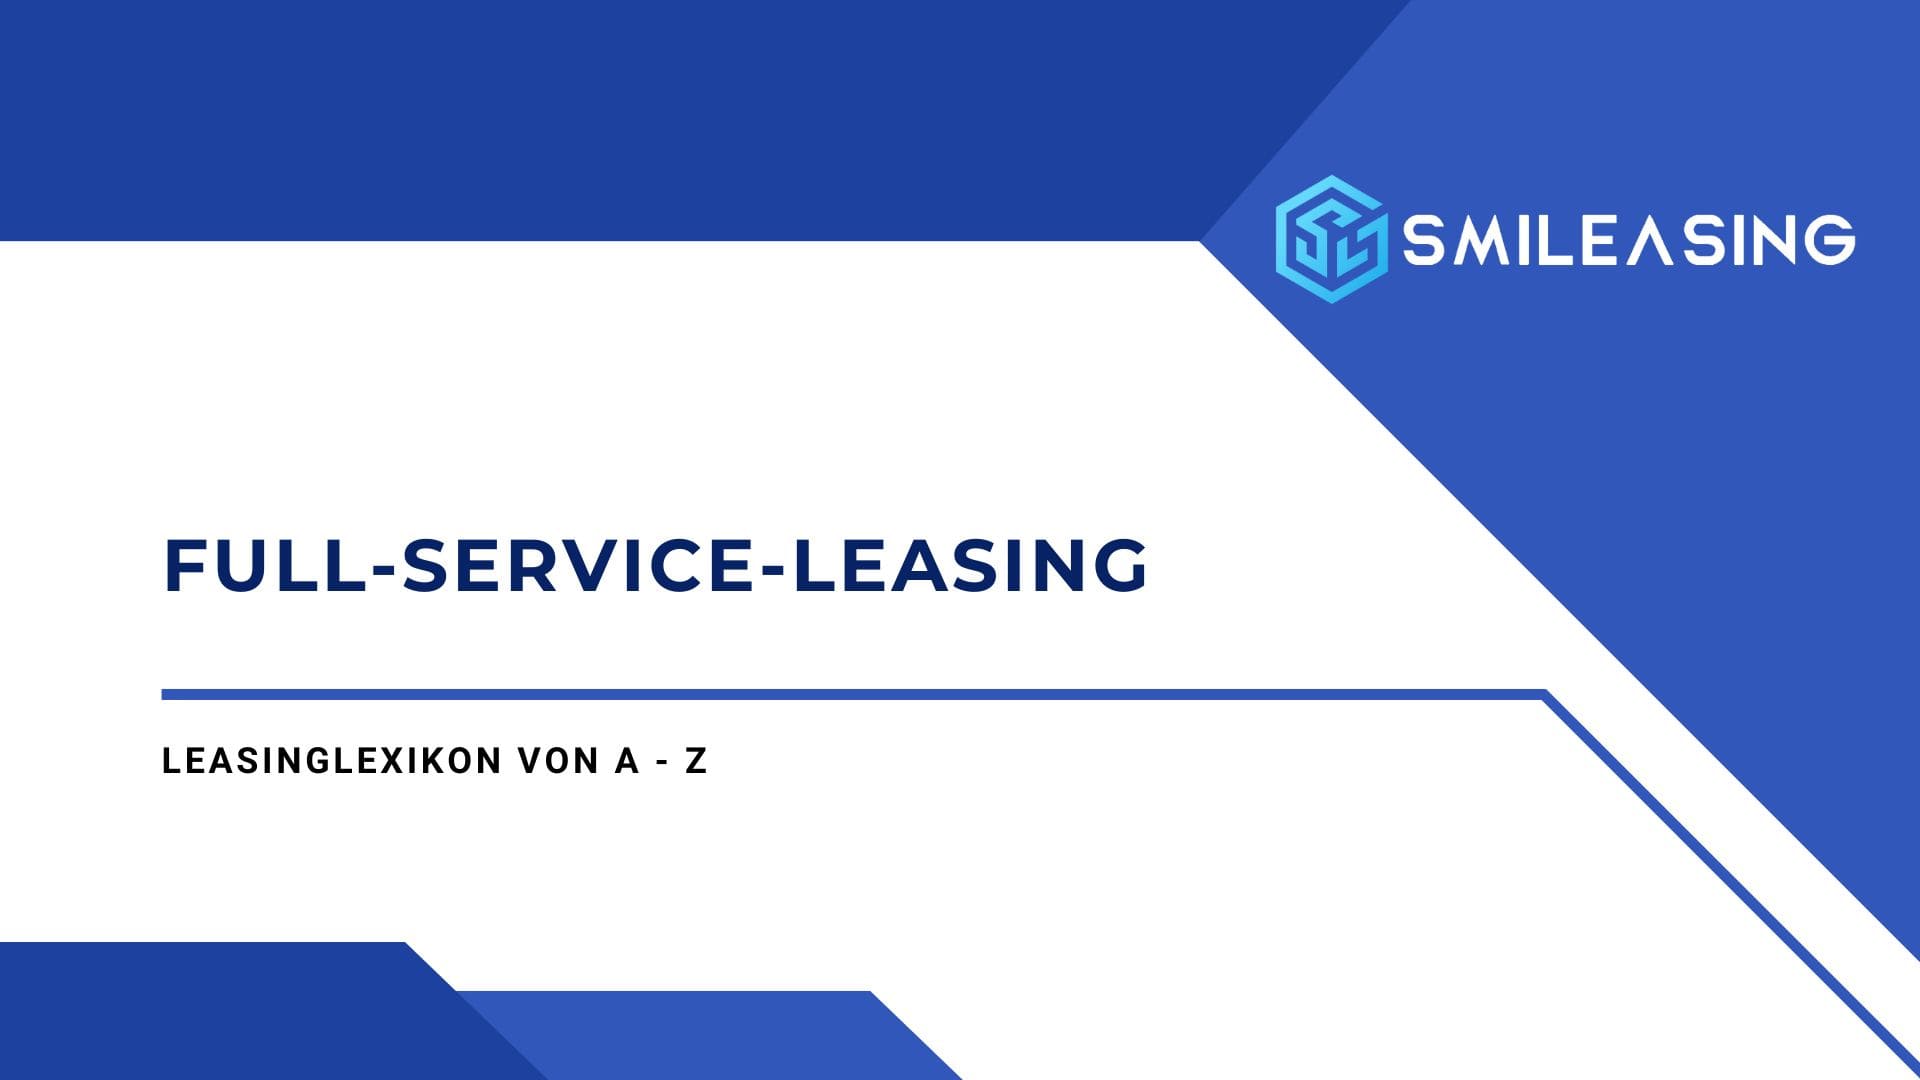 Full-Service-Leasing - Leasinglexikon